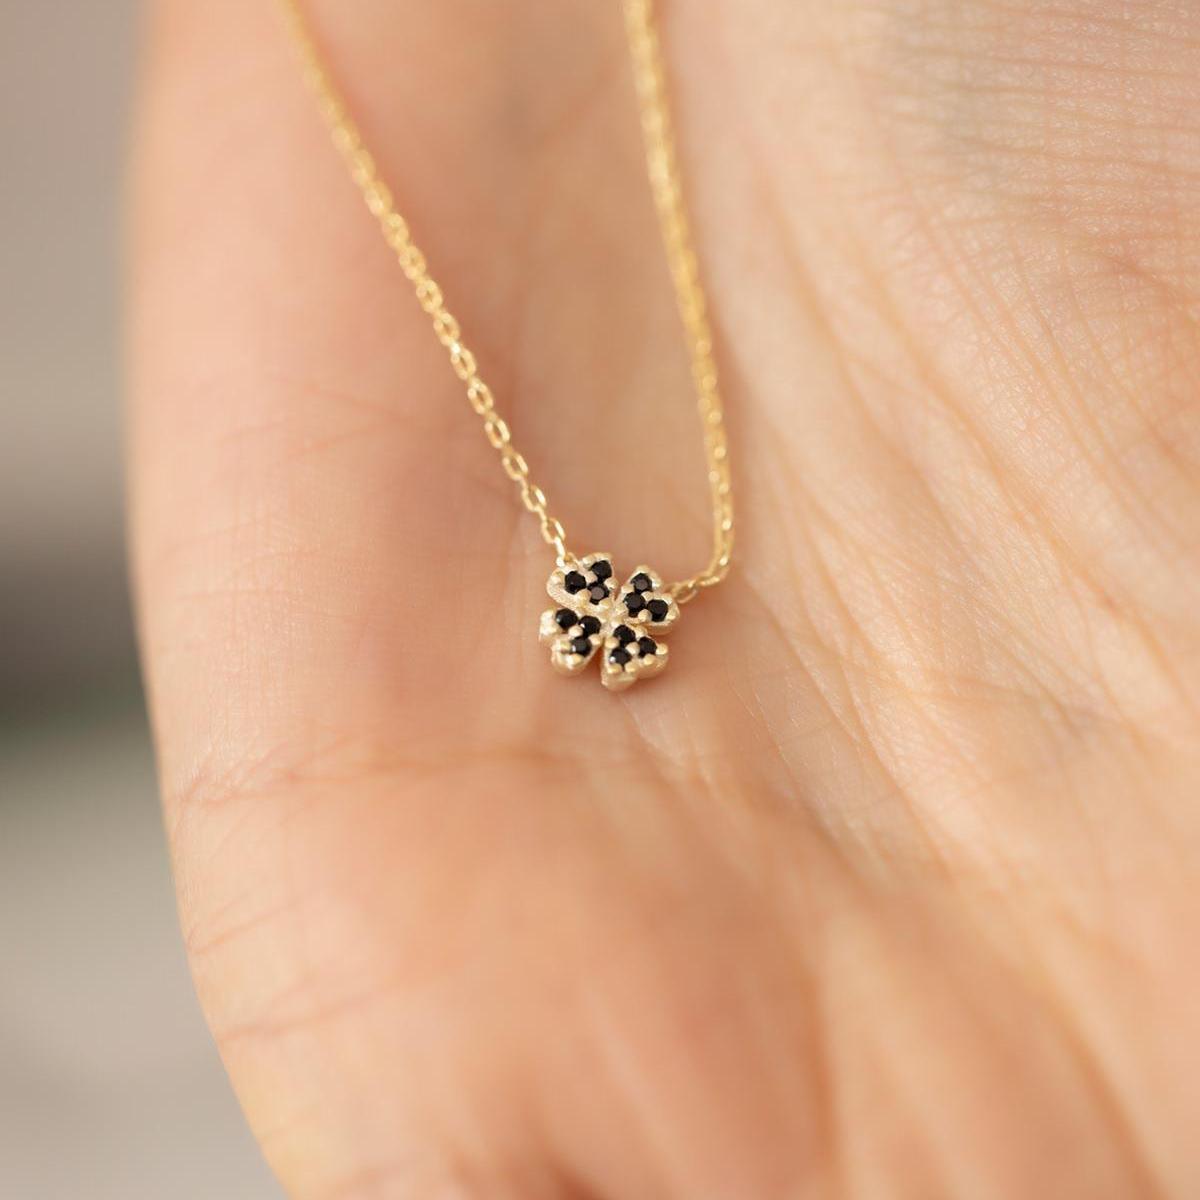 Black Clover Necklace • Clover Leaf Necklace • Black Zirconia Necklace - Trending Silver Gifts